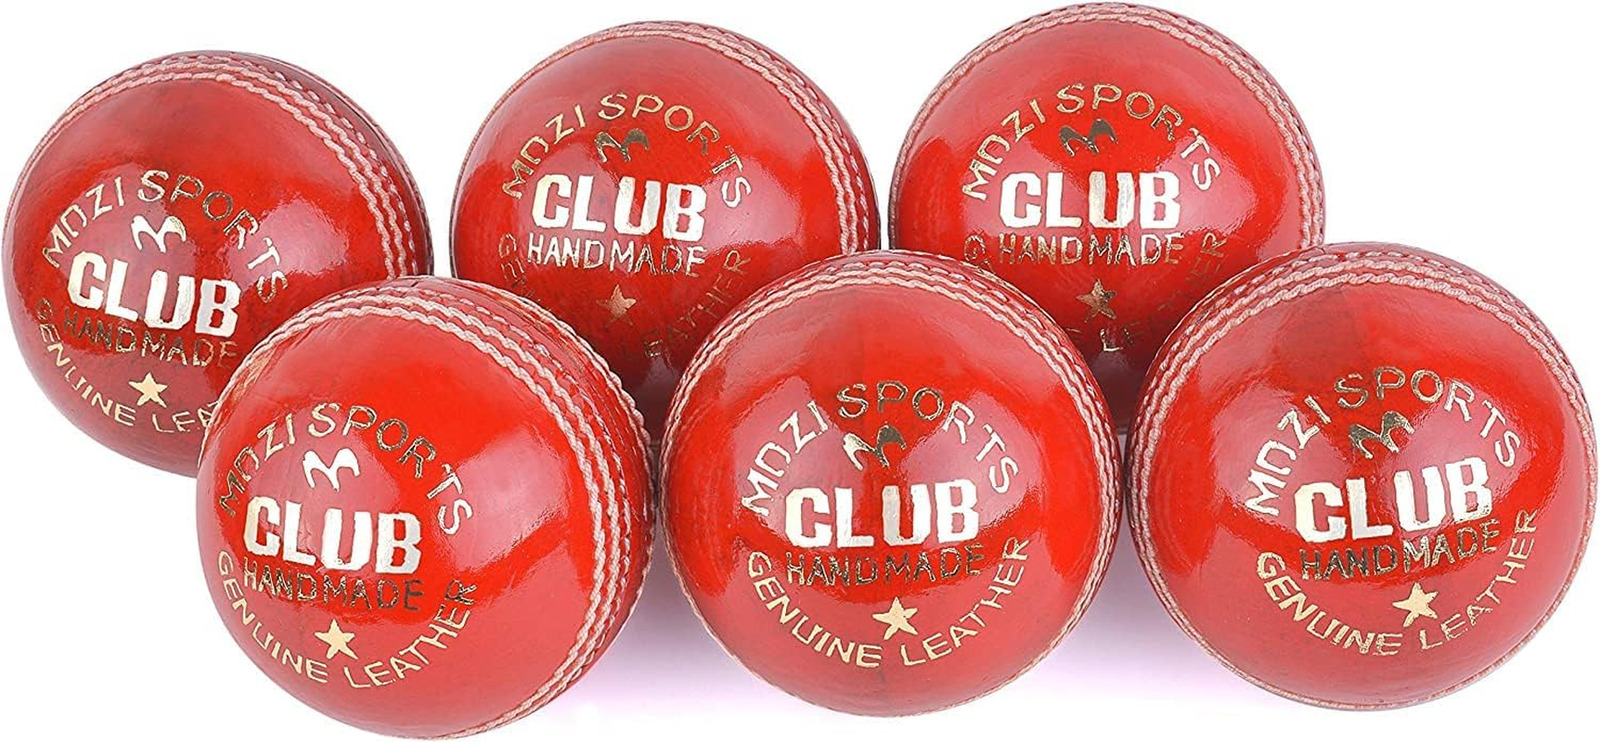 Junior Cricket Balls -4 Pieces School Youth Leather Hard Balls Weight 4.75Oz (13